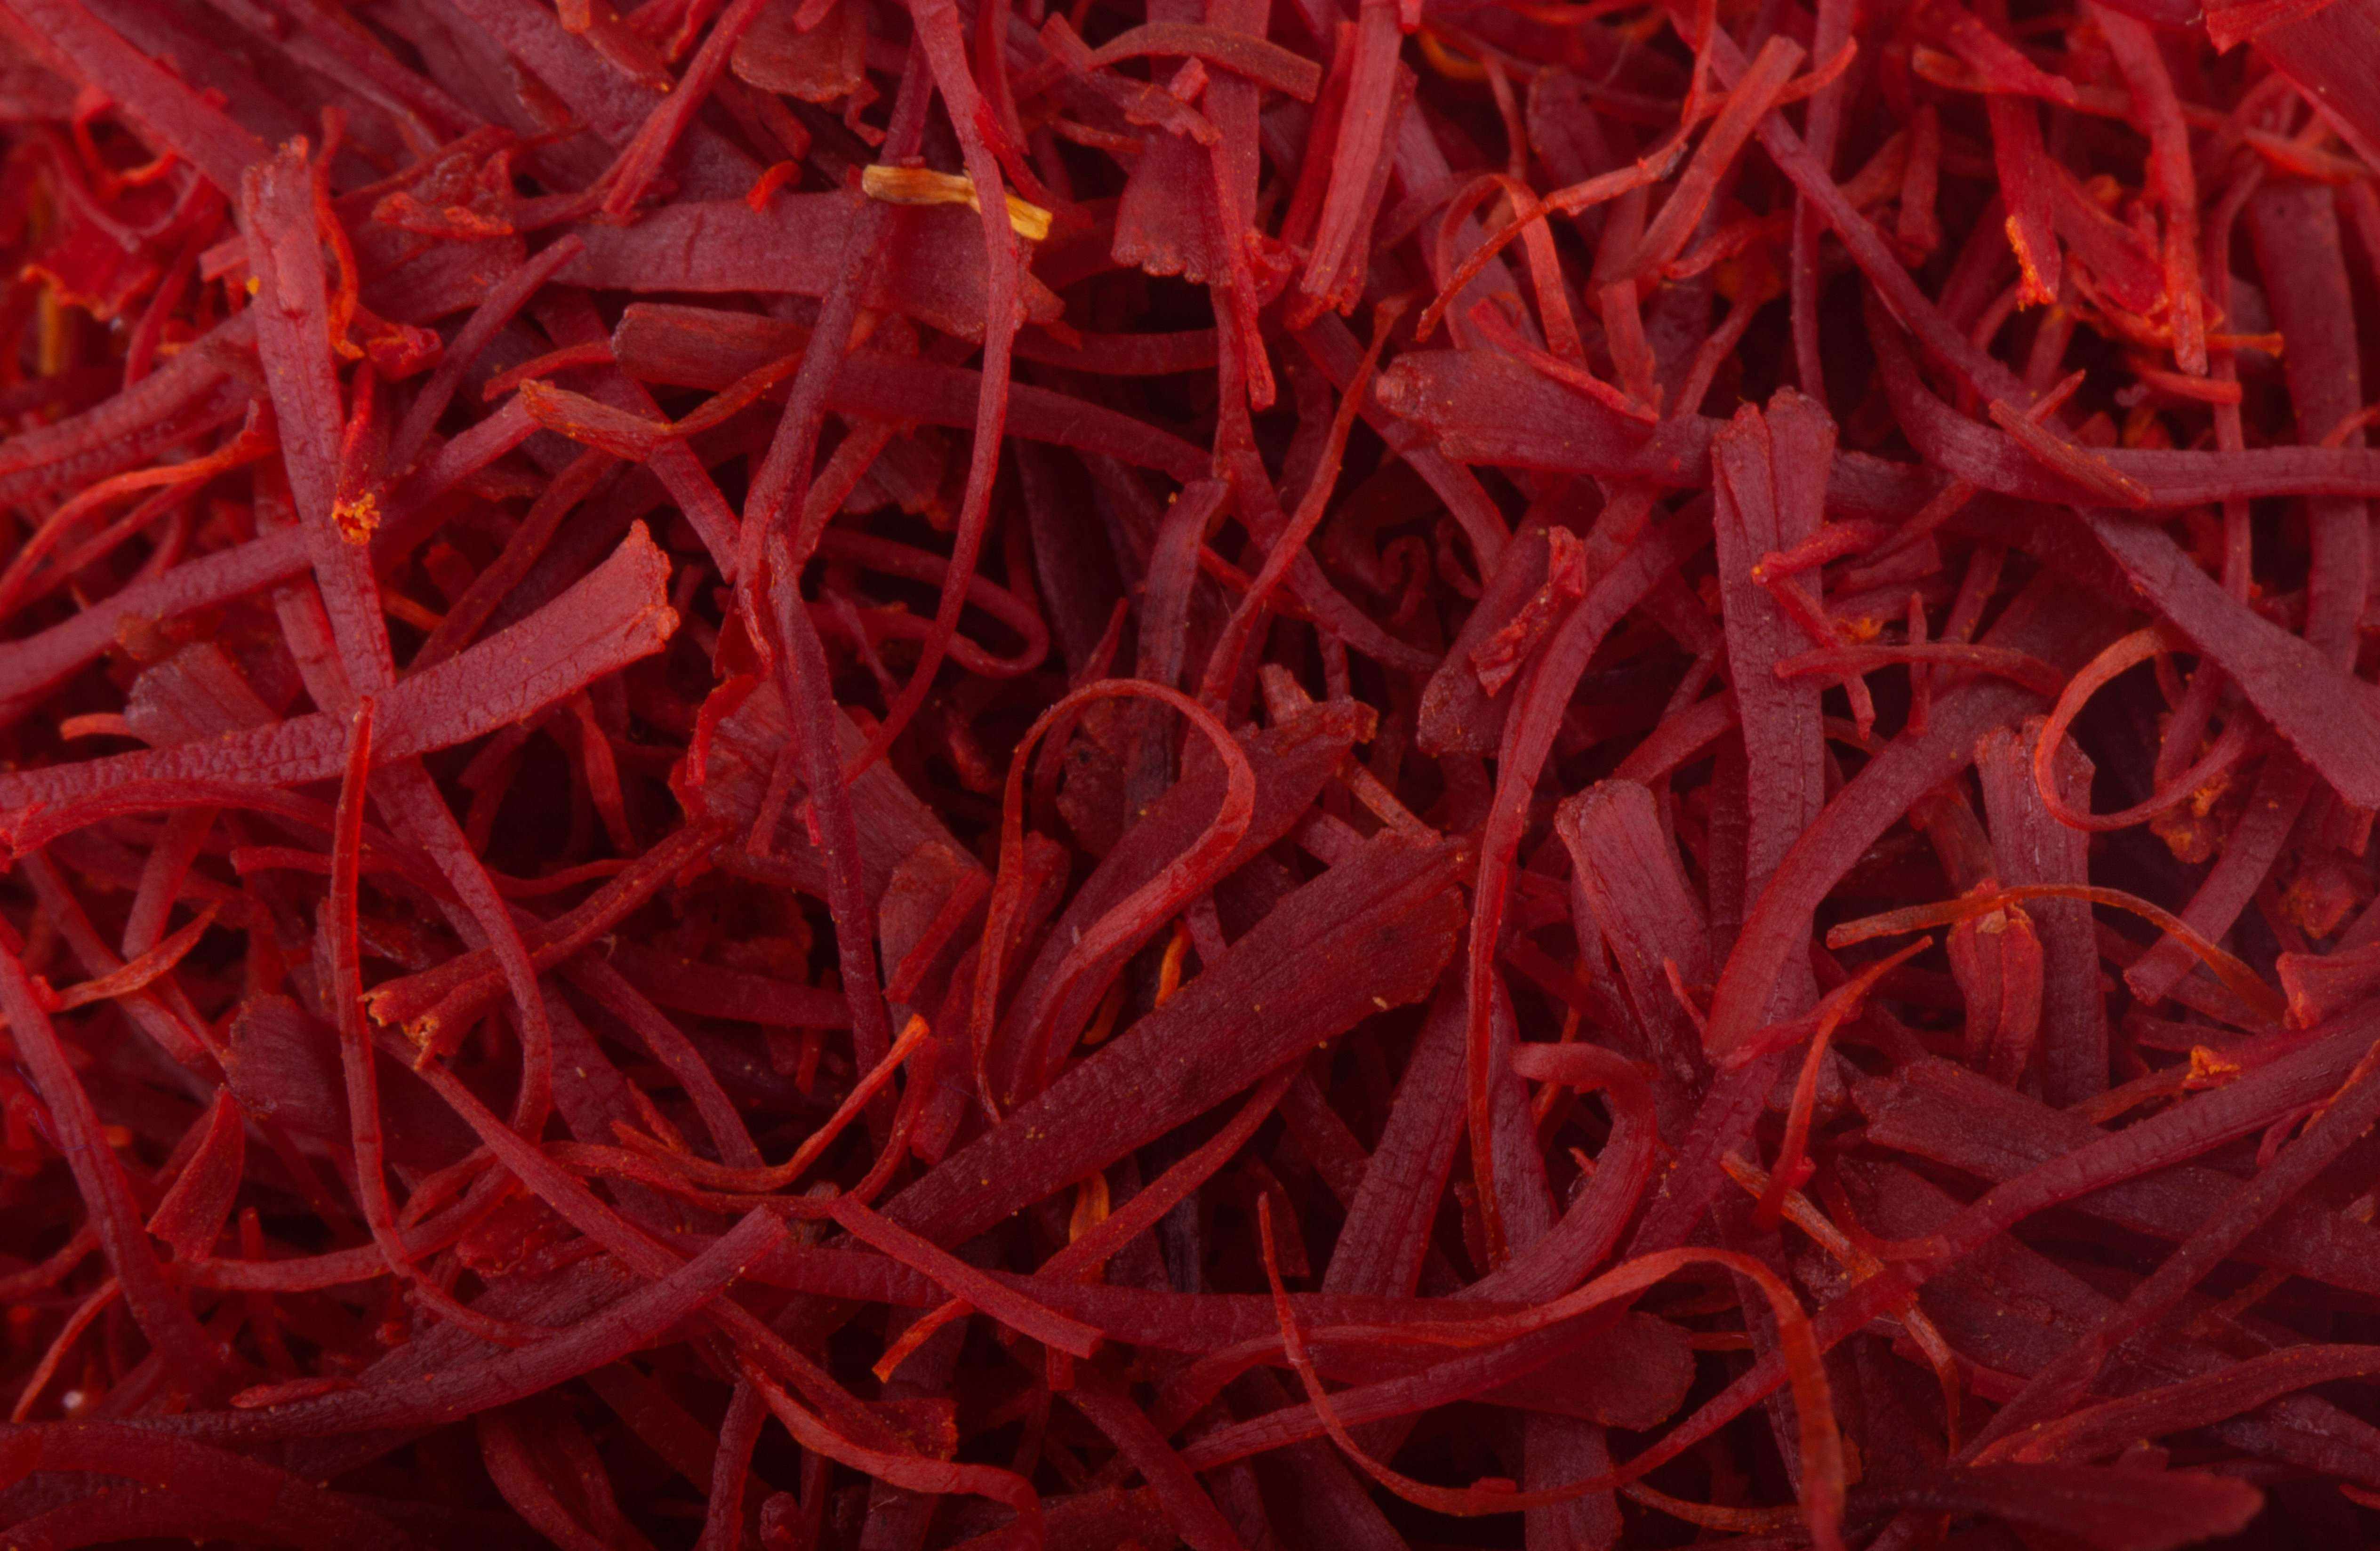 close up of saffron threads